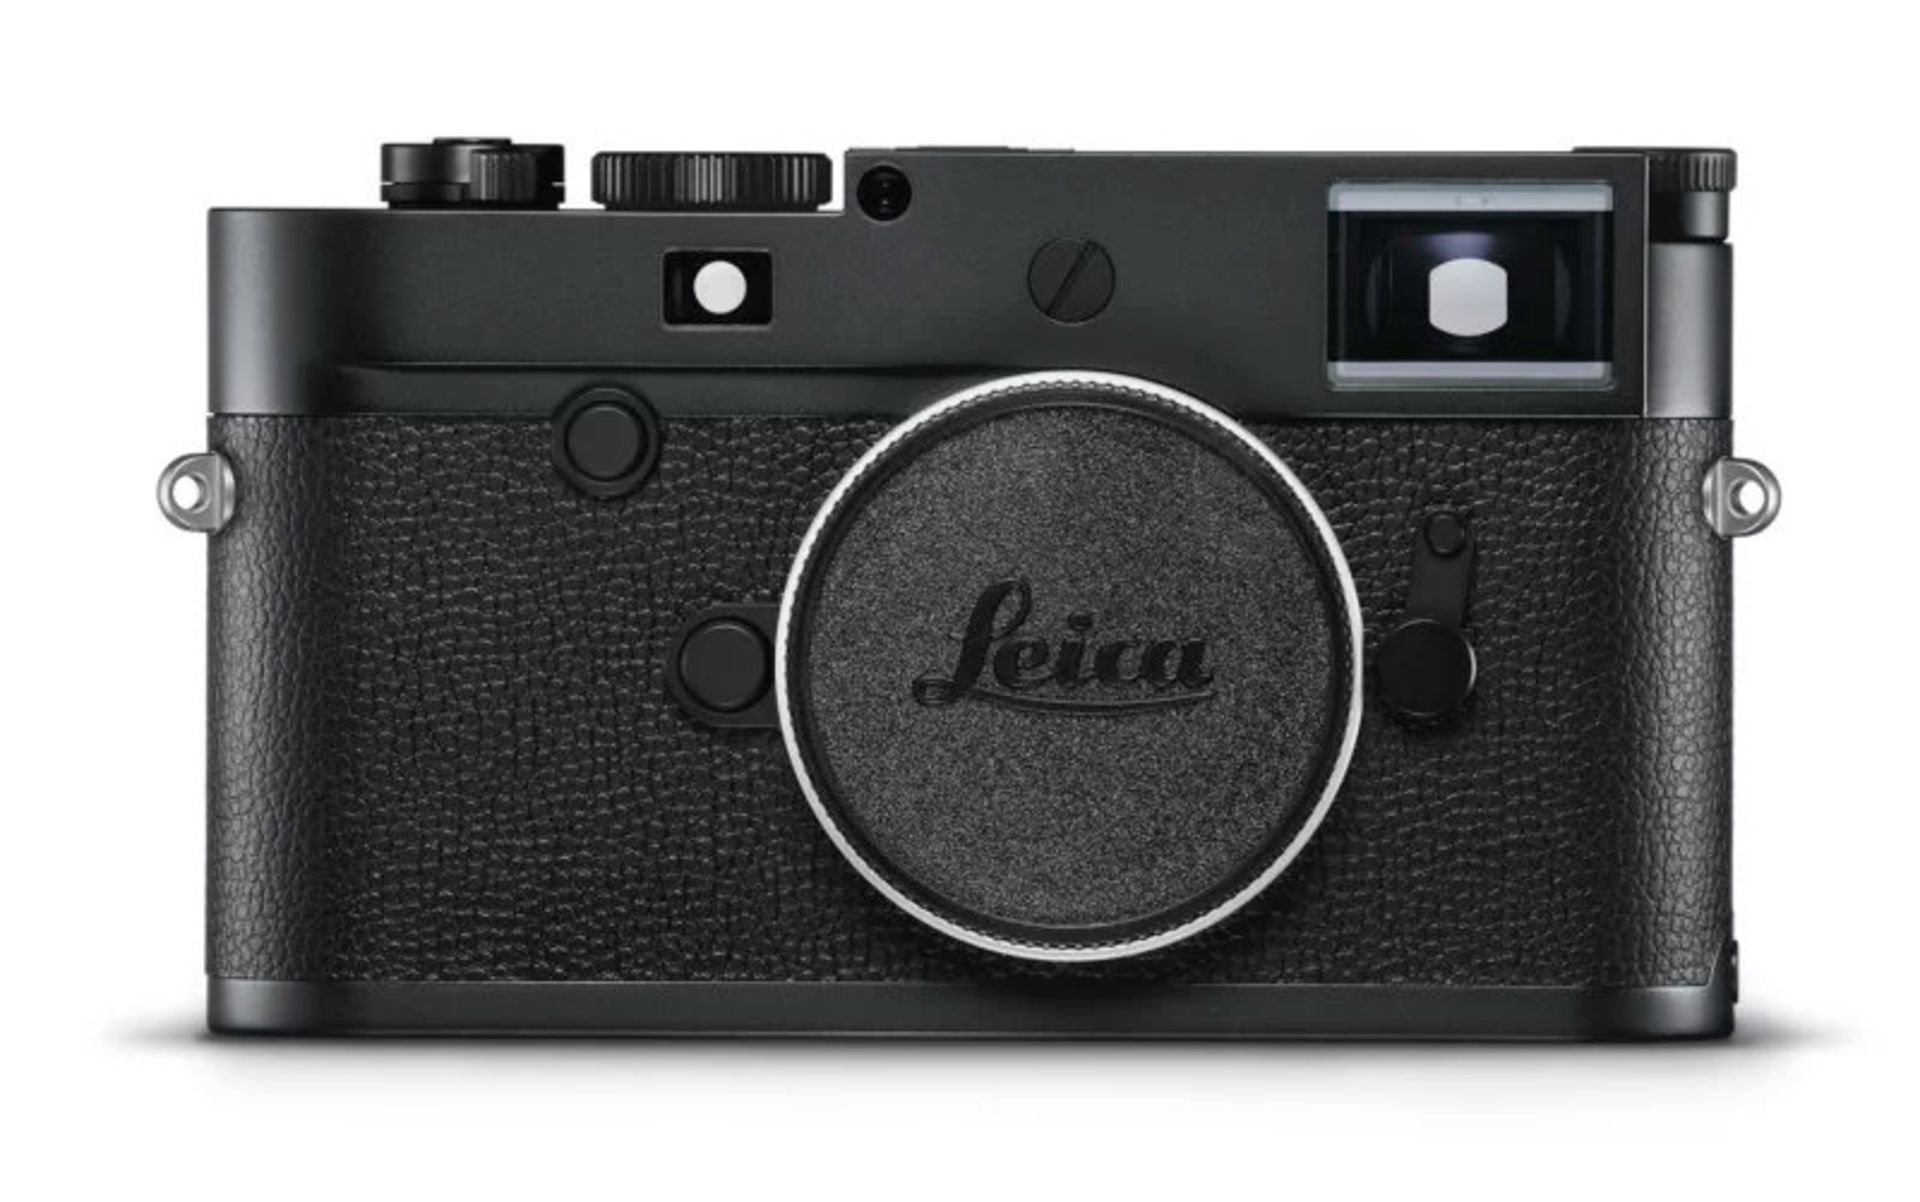 دوربین مونوکروم لایکا M10 / Leica M10 monochrome